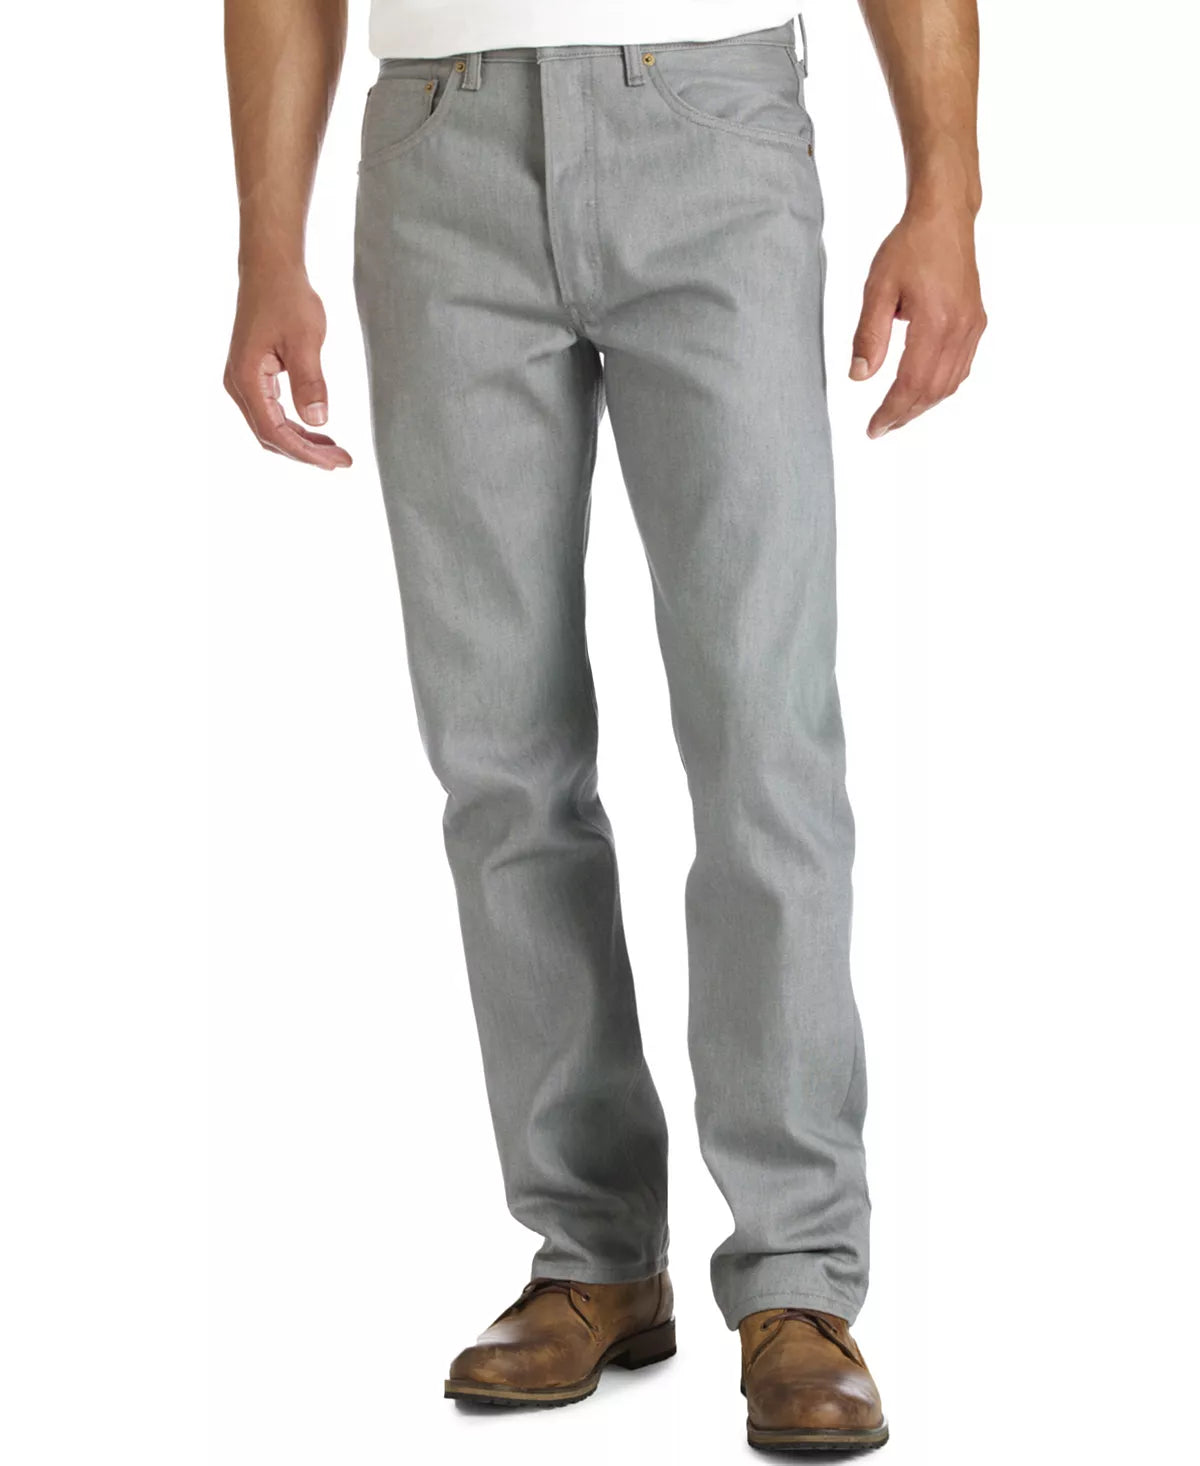 Levi's - Original Shrink-to-Fit Non-Stretch Jeans - Silver Rigid